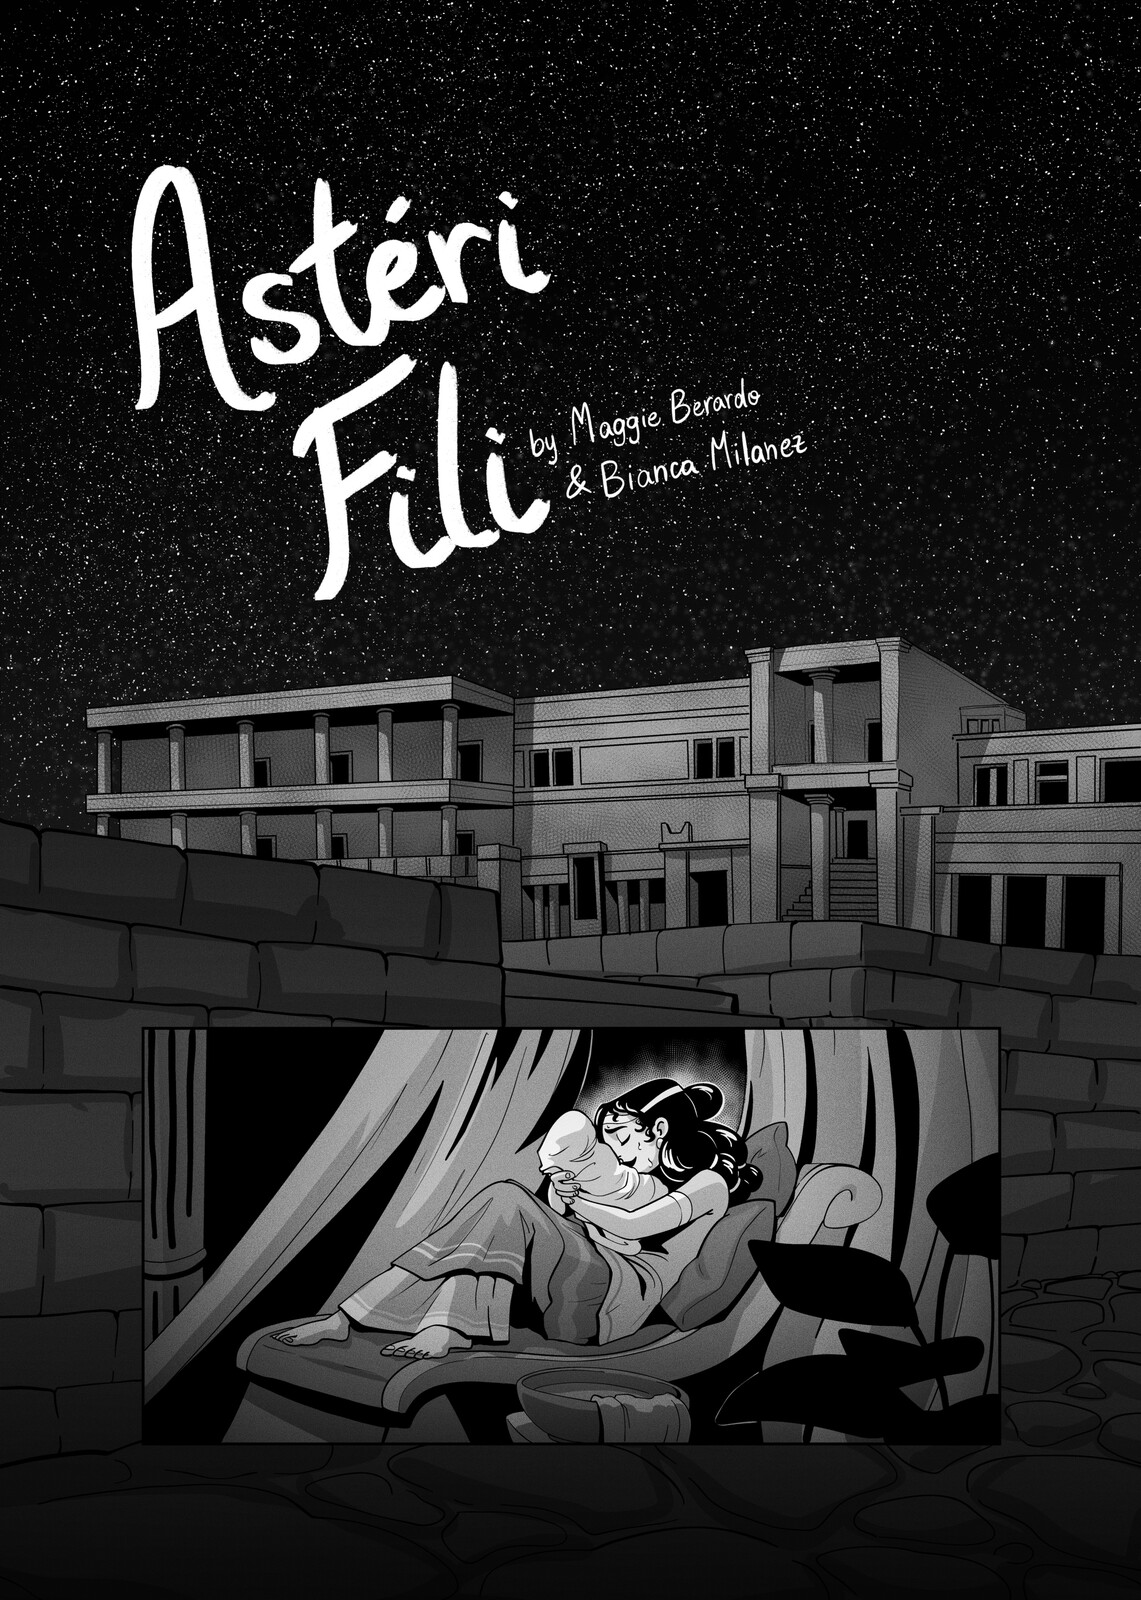 Astéri Fili - Lifeblood a hades fancomic anthology